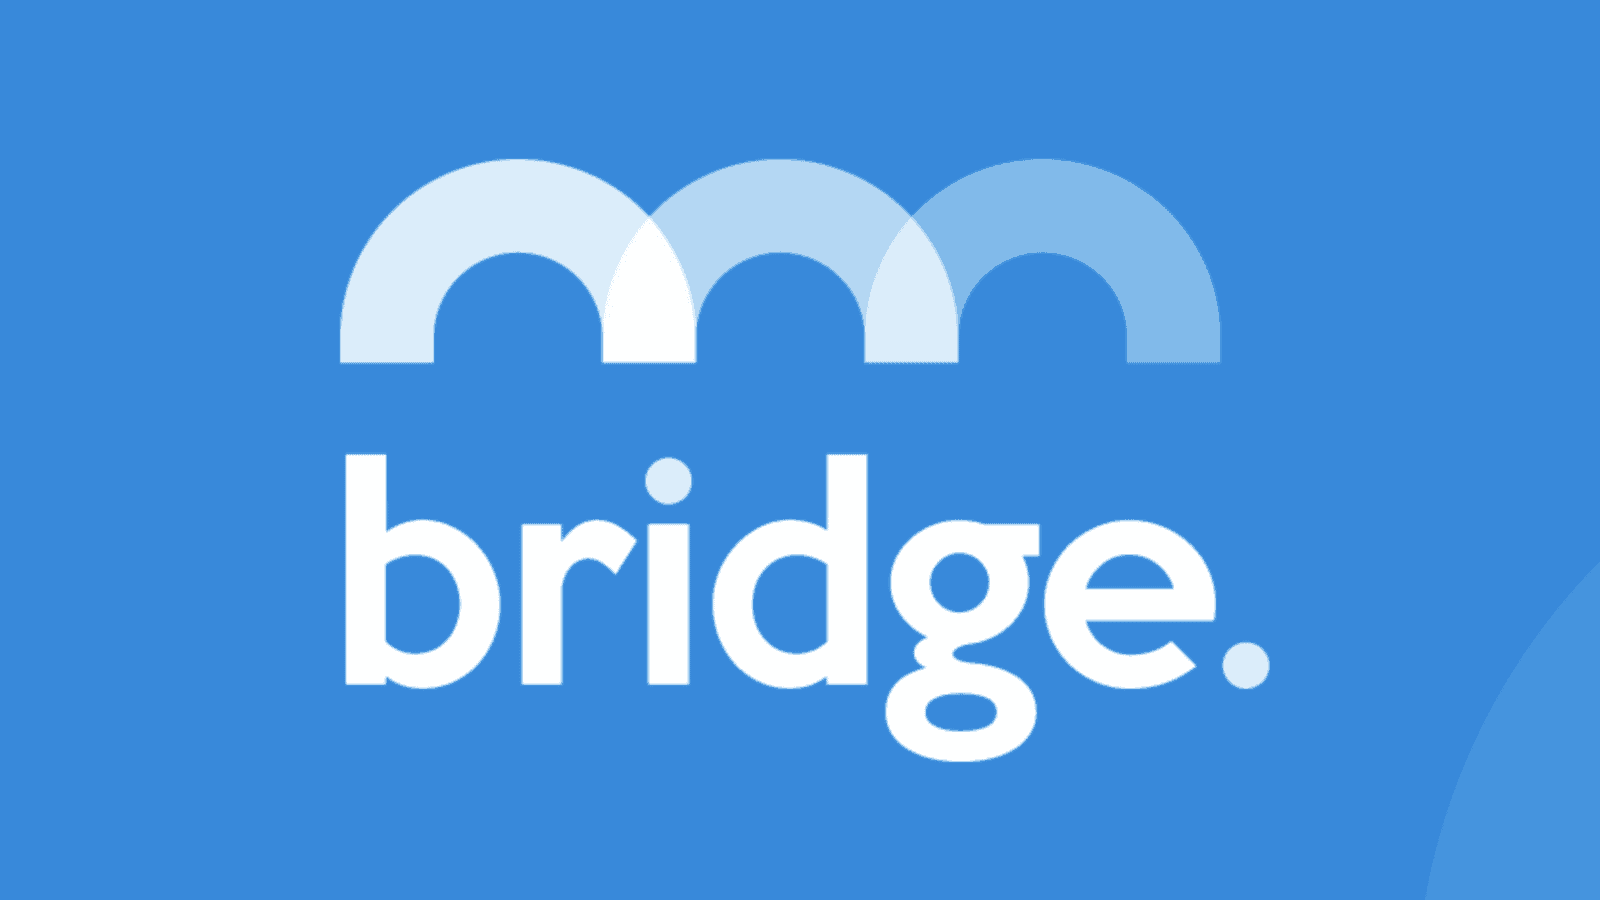 Bridge Mutual (BMI) - All information about Bridge Mutual ICO (Token Sale)  - ICO Drops